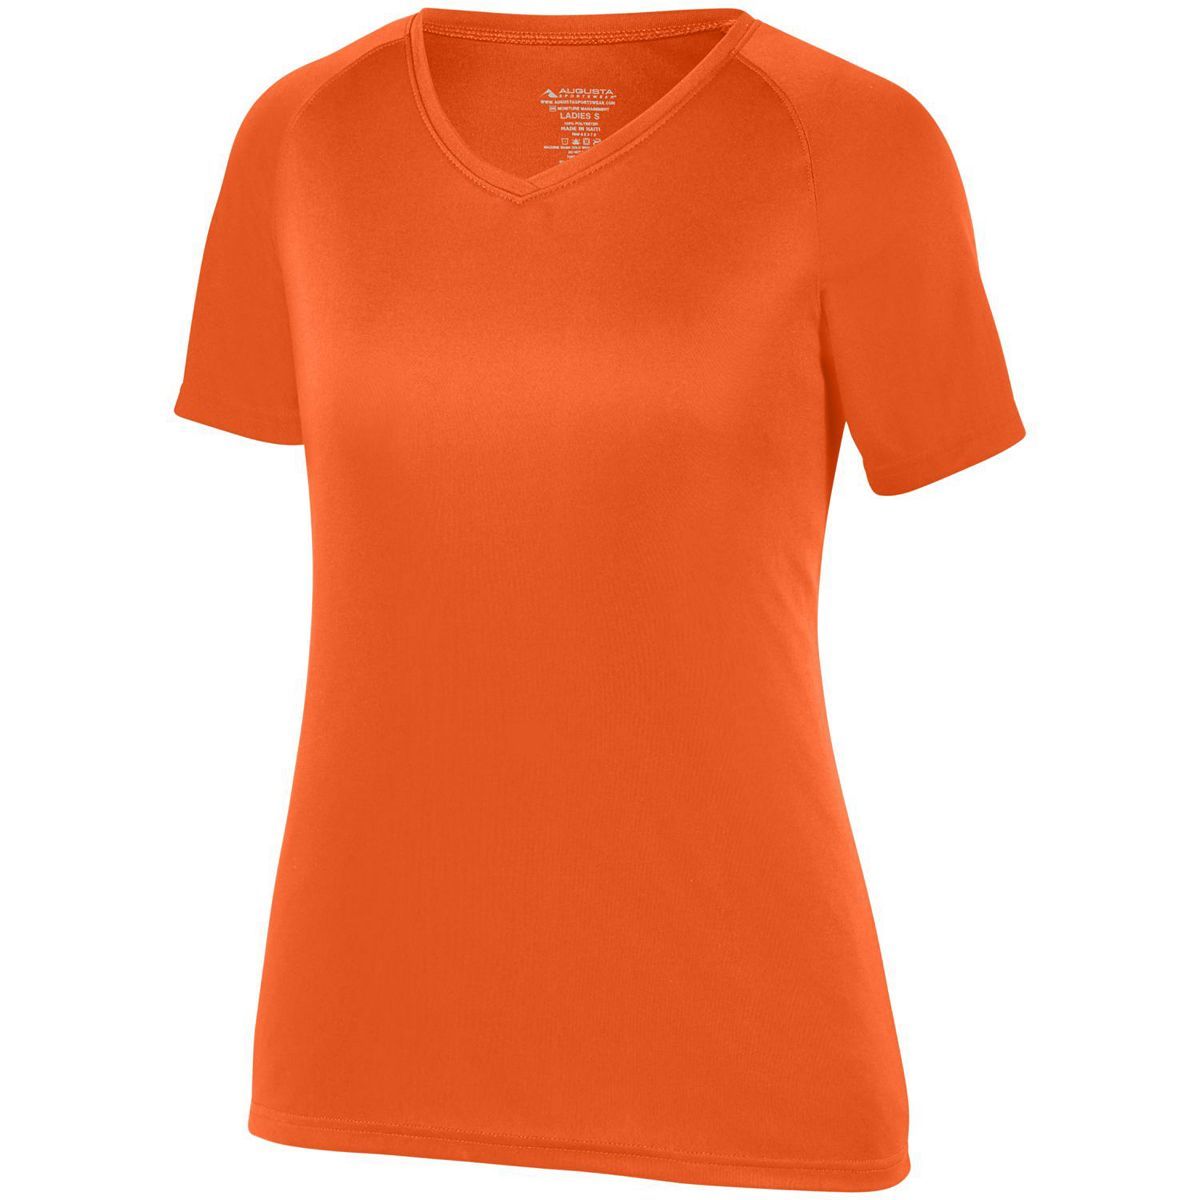 Augusta Sportswear Girls Attain Wicking Raglan Sleeve Tee in Orange  -Part of the Girls, T-Shirts, Augusta-Products, Girls-Tee-Shirt, Shirts product lines at KanaleyCreations.com